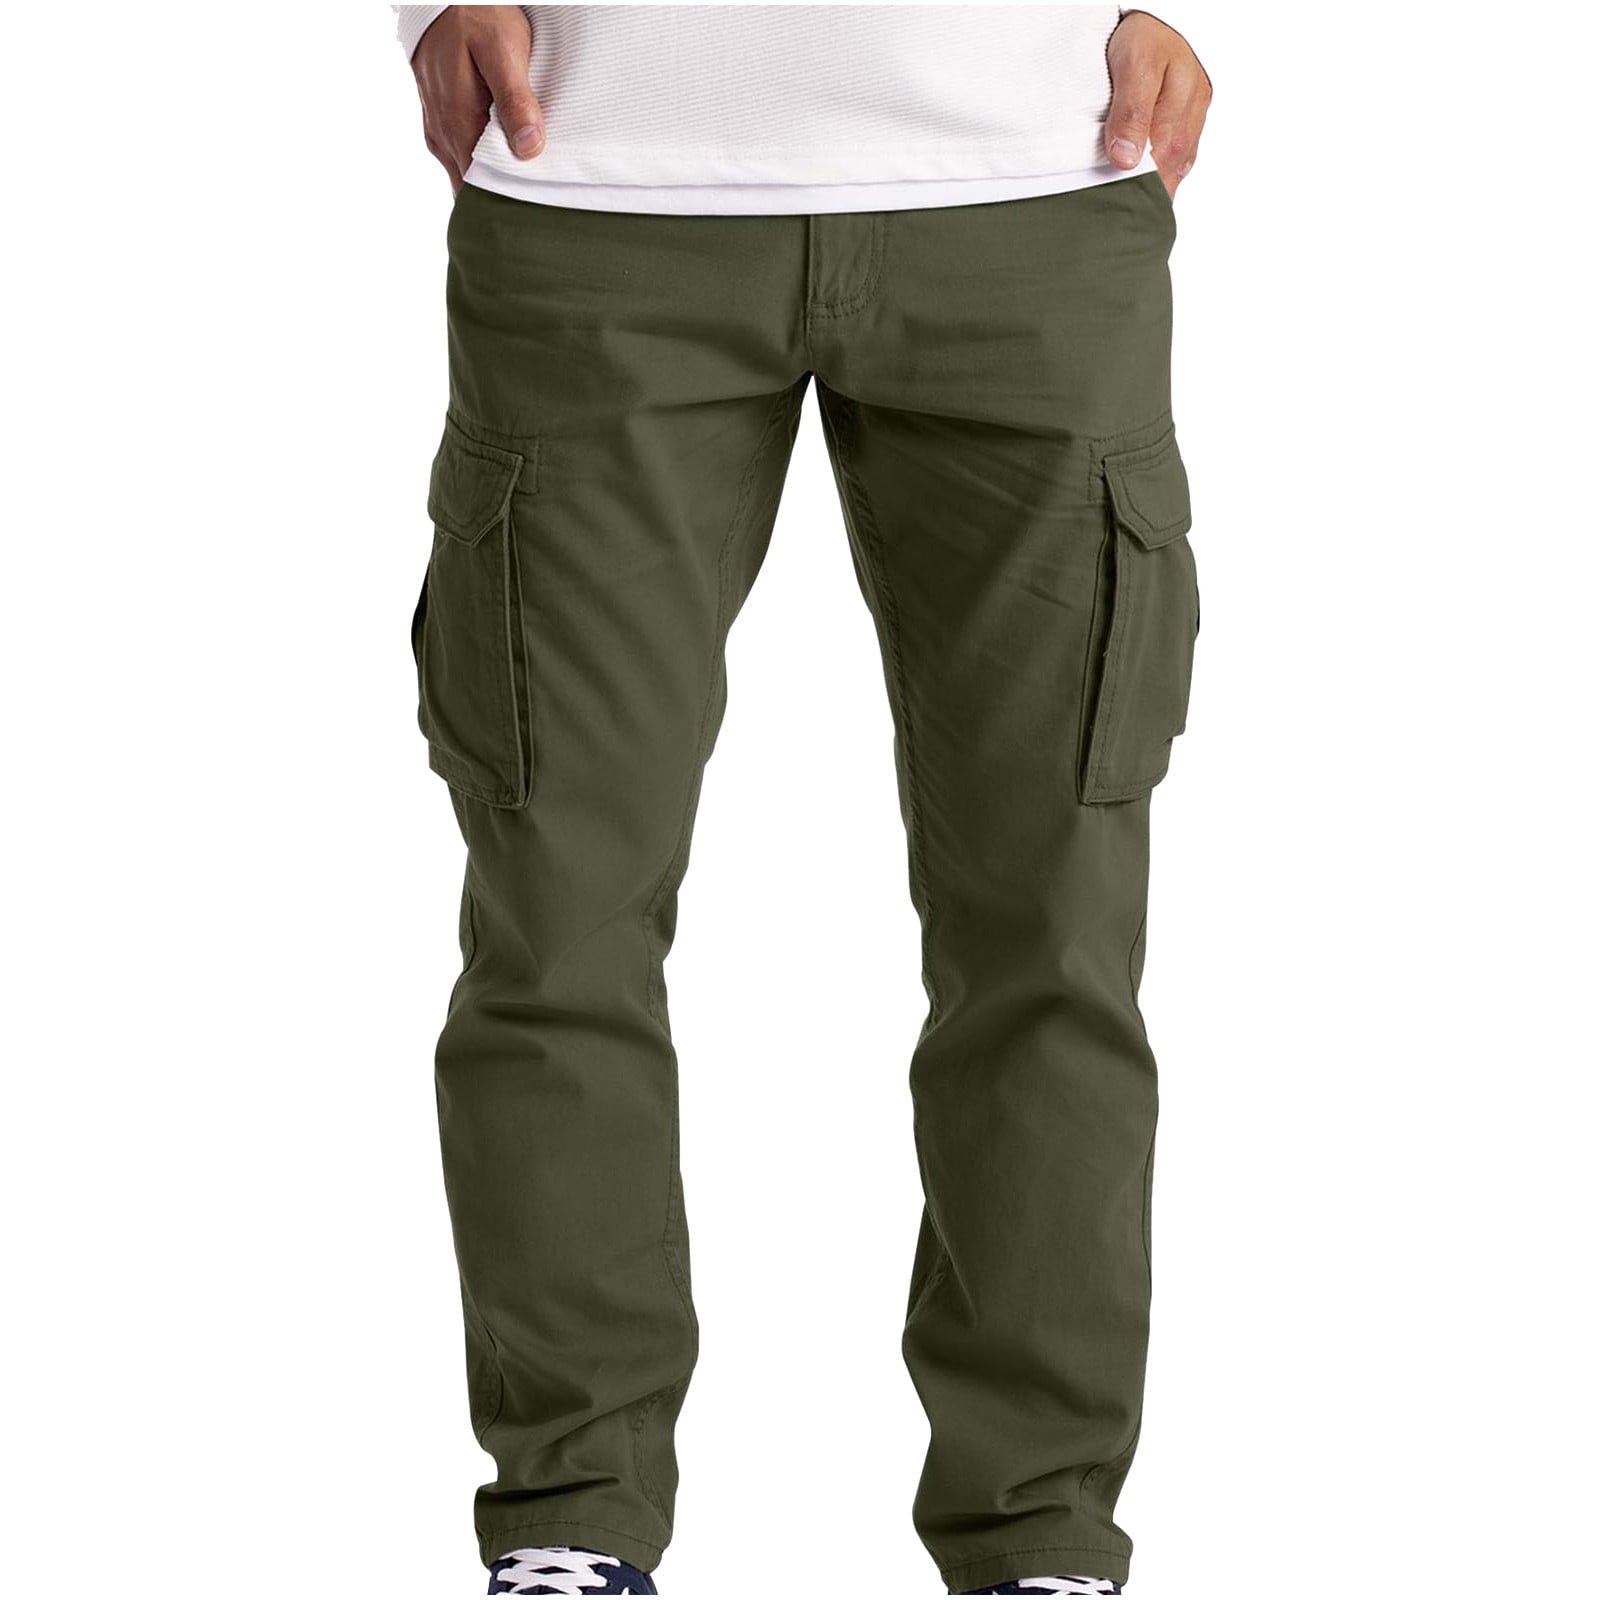 ZKCCNUK Cargo Pants for Men's Cargo Trousers Work Wear Combat